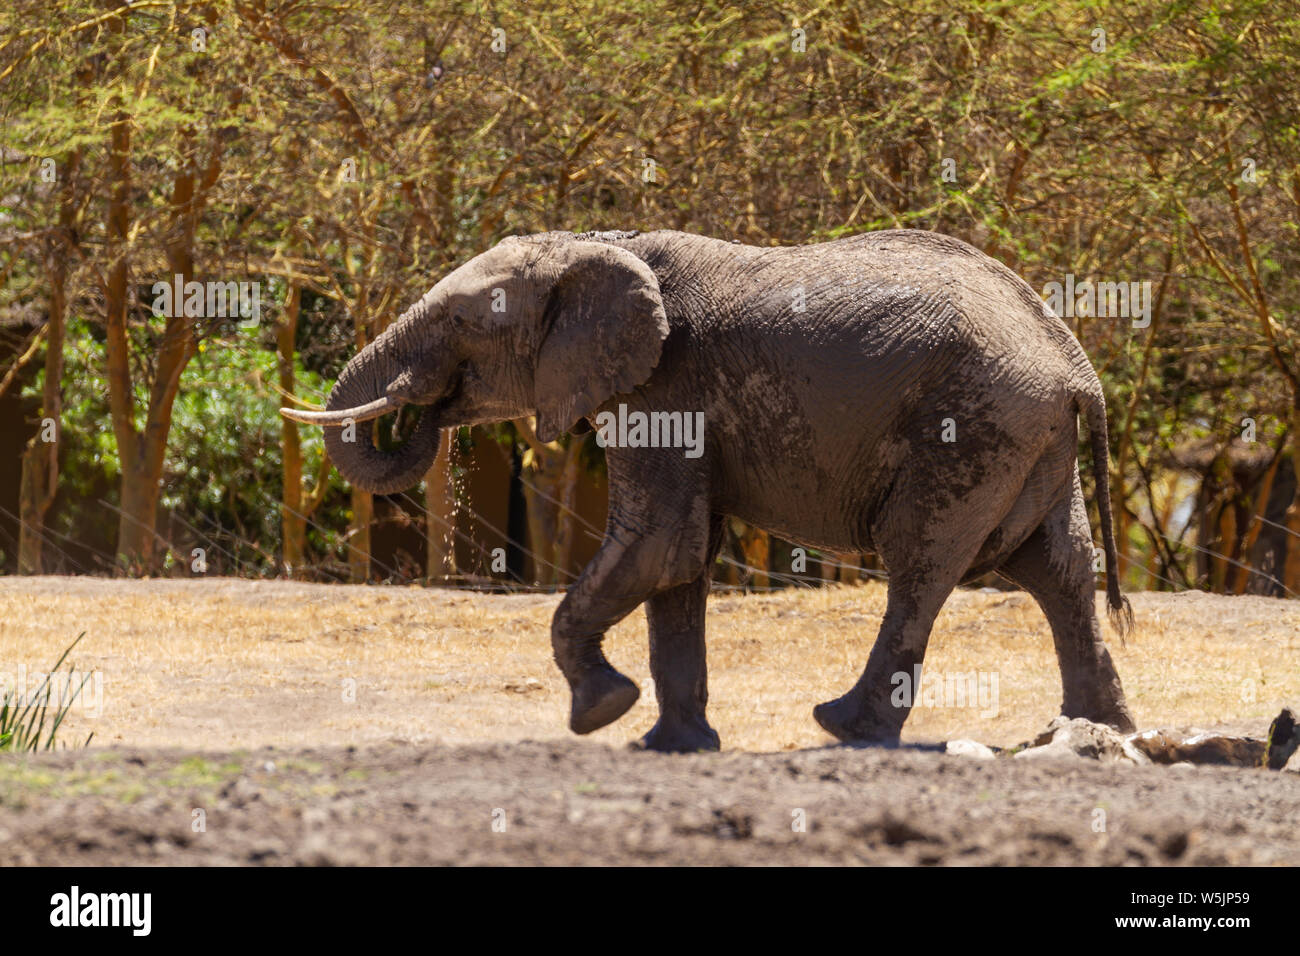 Elephant, Loxodonta Africana, drinking dripping water from waterhole at Ol Pejeta Conservancy, Kenya, Africa. Safari tents beyond Stock Photo